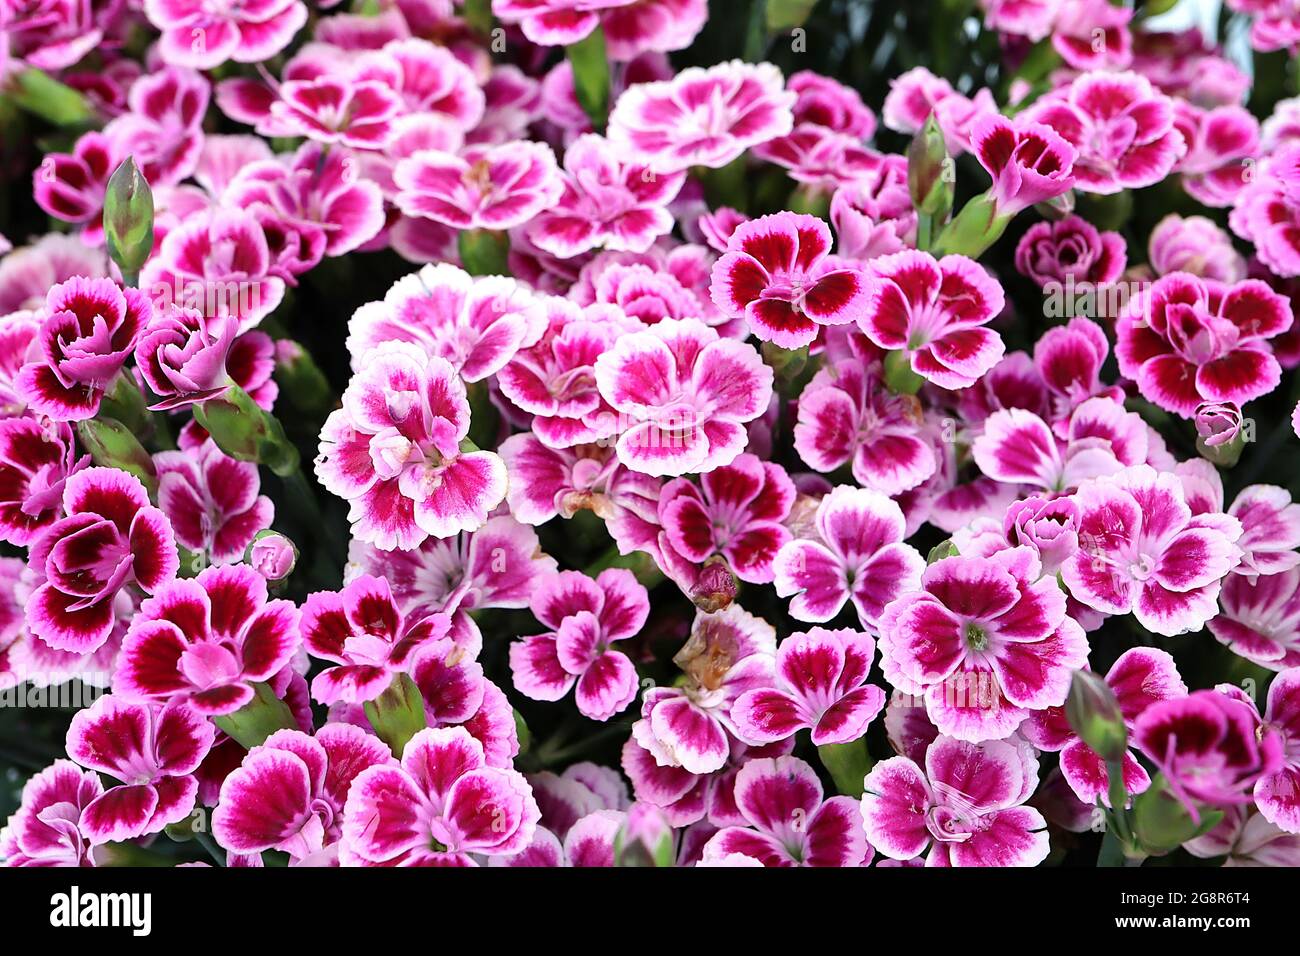 Dianthus ‘Pink Kisses’ Carnation / Garden Pinks Pink Kisses – blassrosa gefranste Doppelblüten mit karmesinroten Markierungen, Mai, England, UK Stockfoto